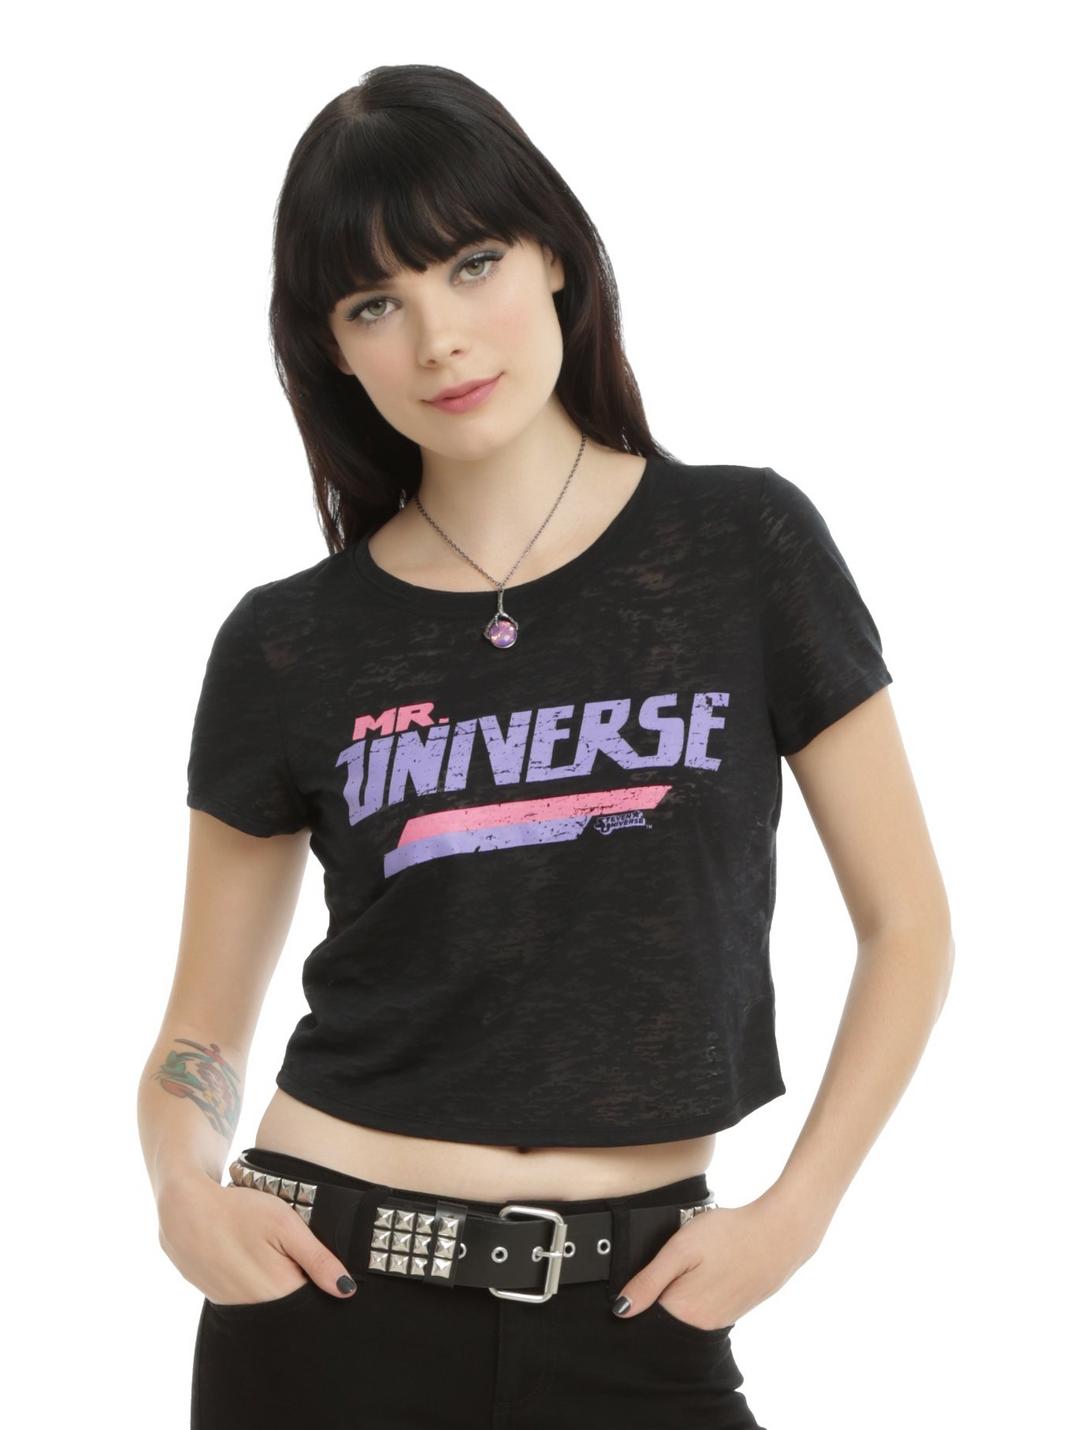 Cartoon Network Steven Universe Mr. Universe Girls T-Shirt, BLACK, hi-res